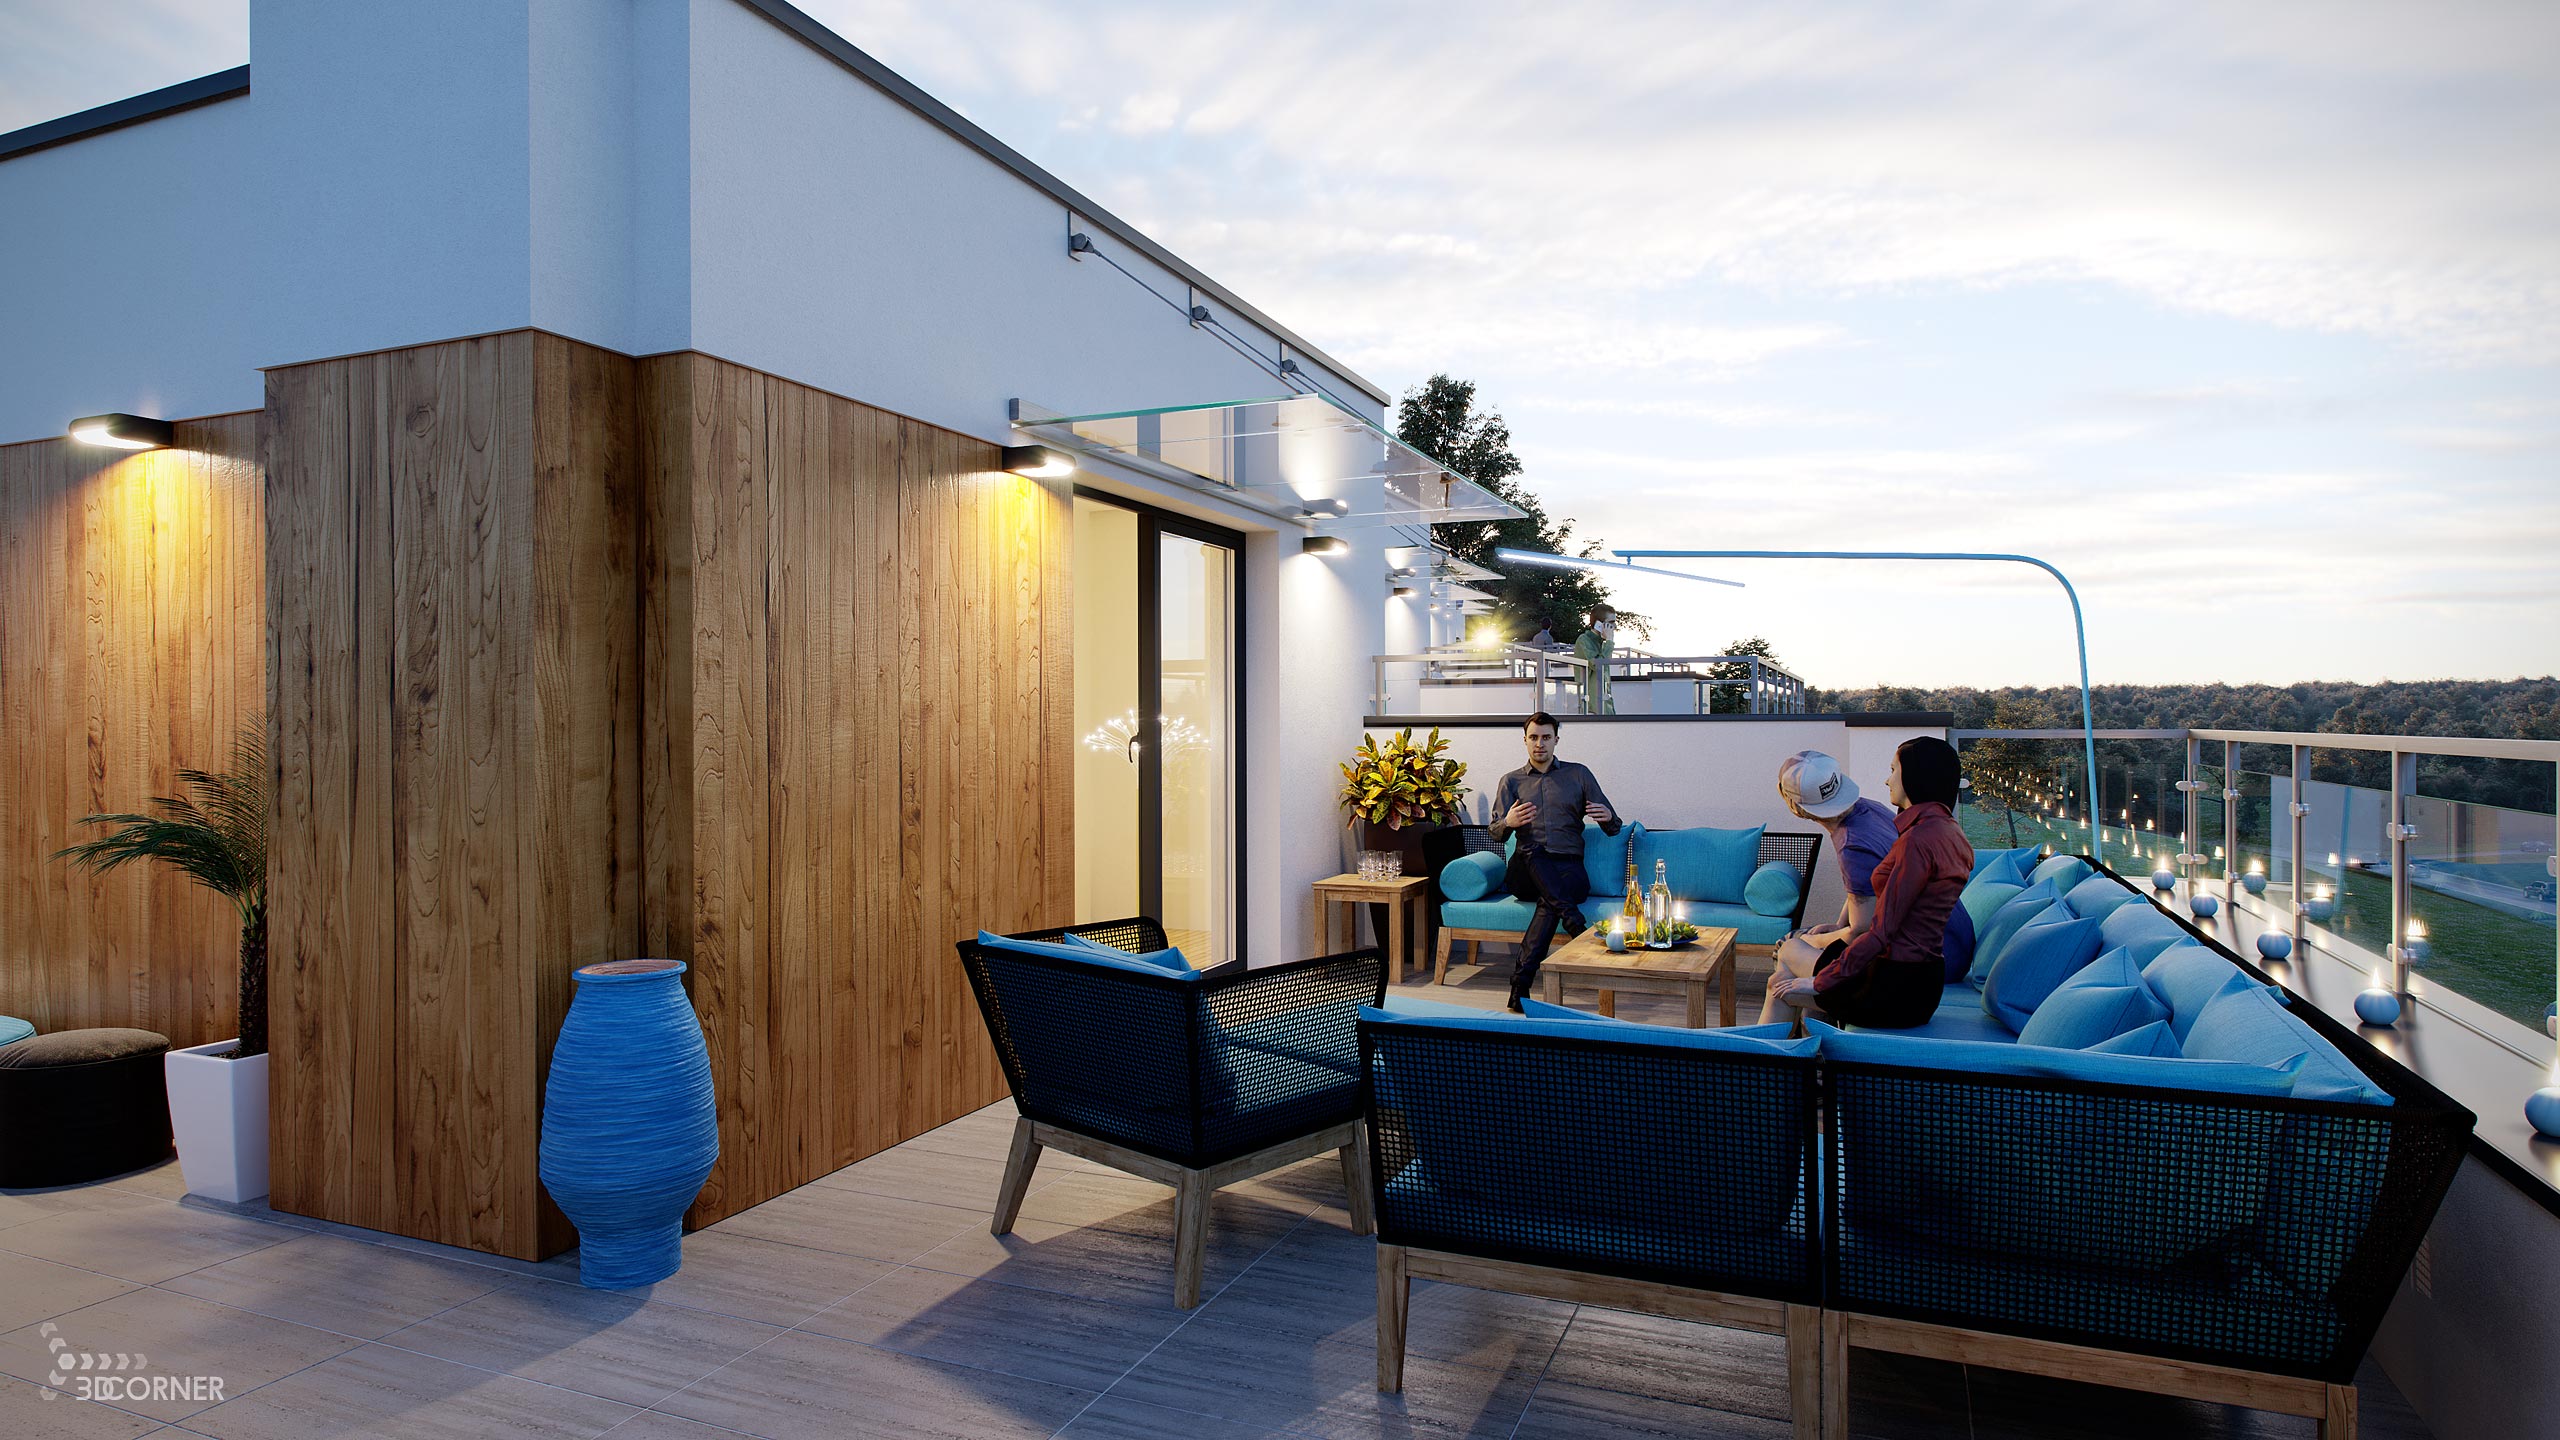 visualization exterior photorealistic modern architecture nigtht apartment terrace 3dcorner